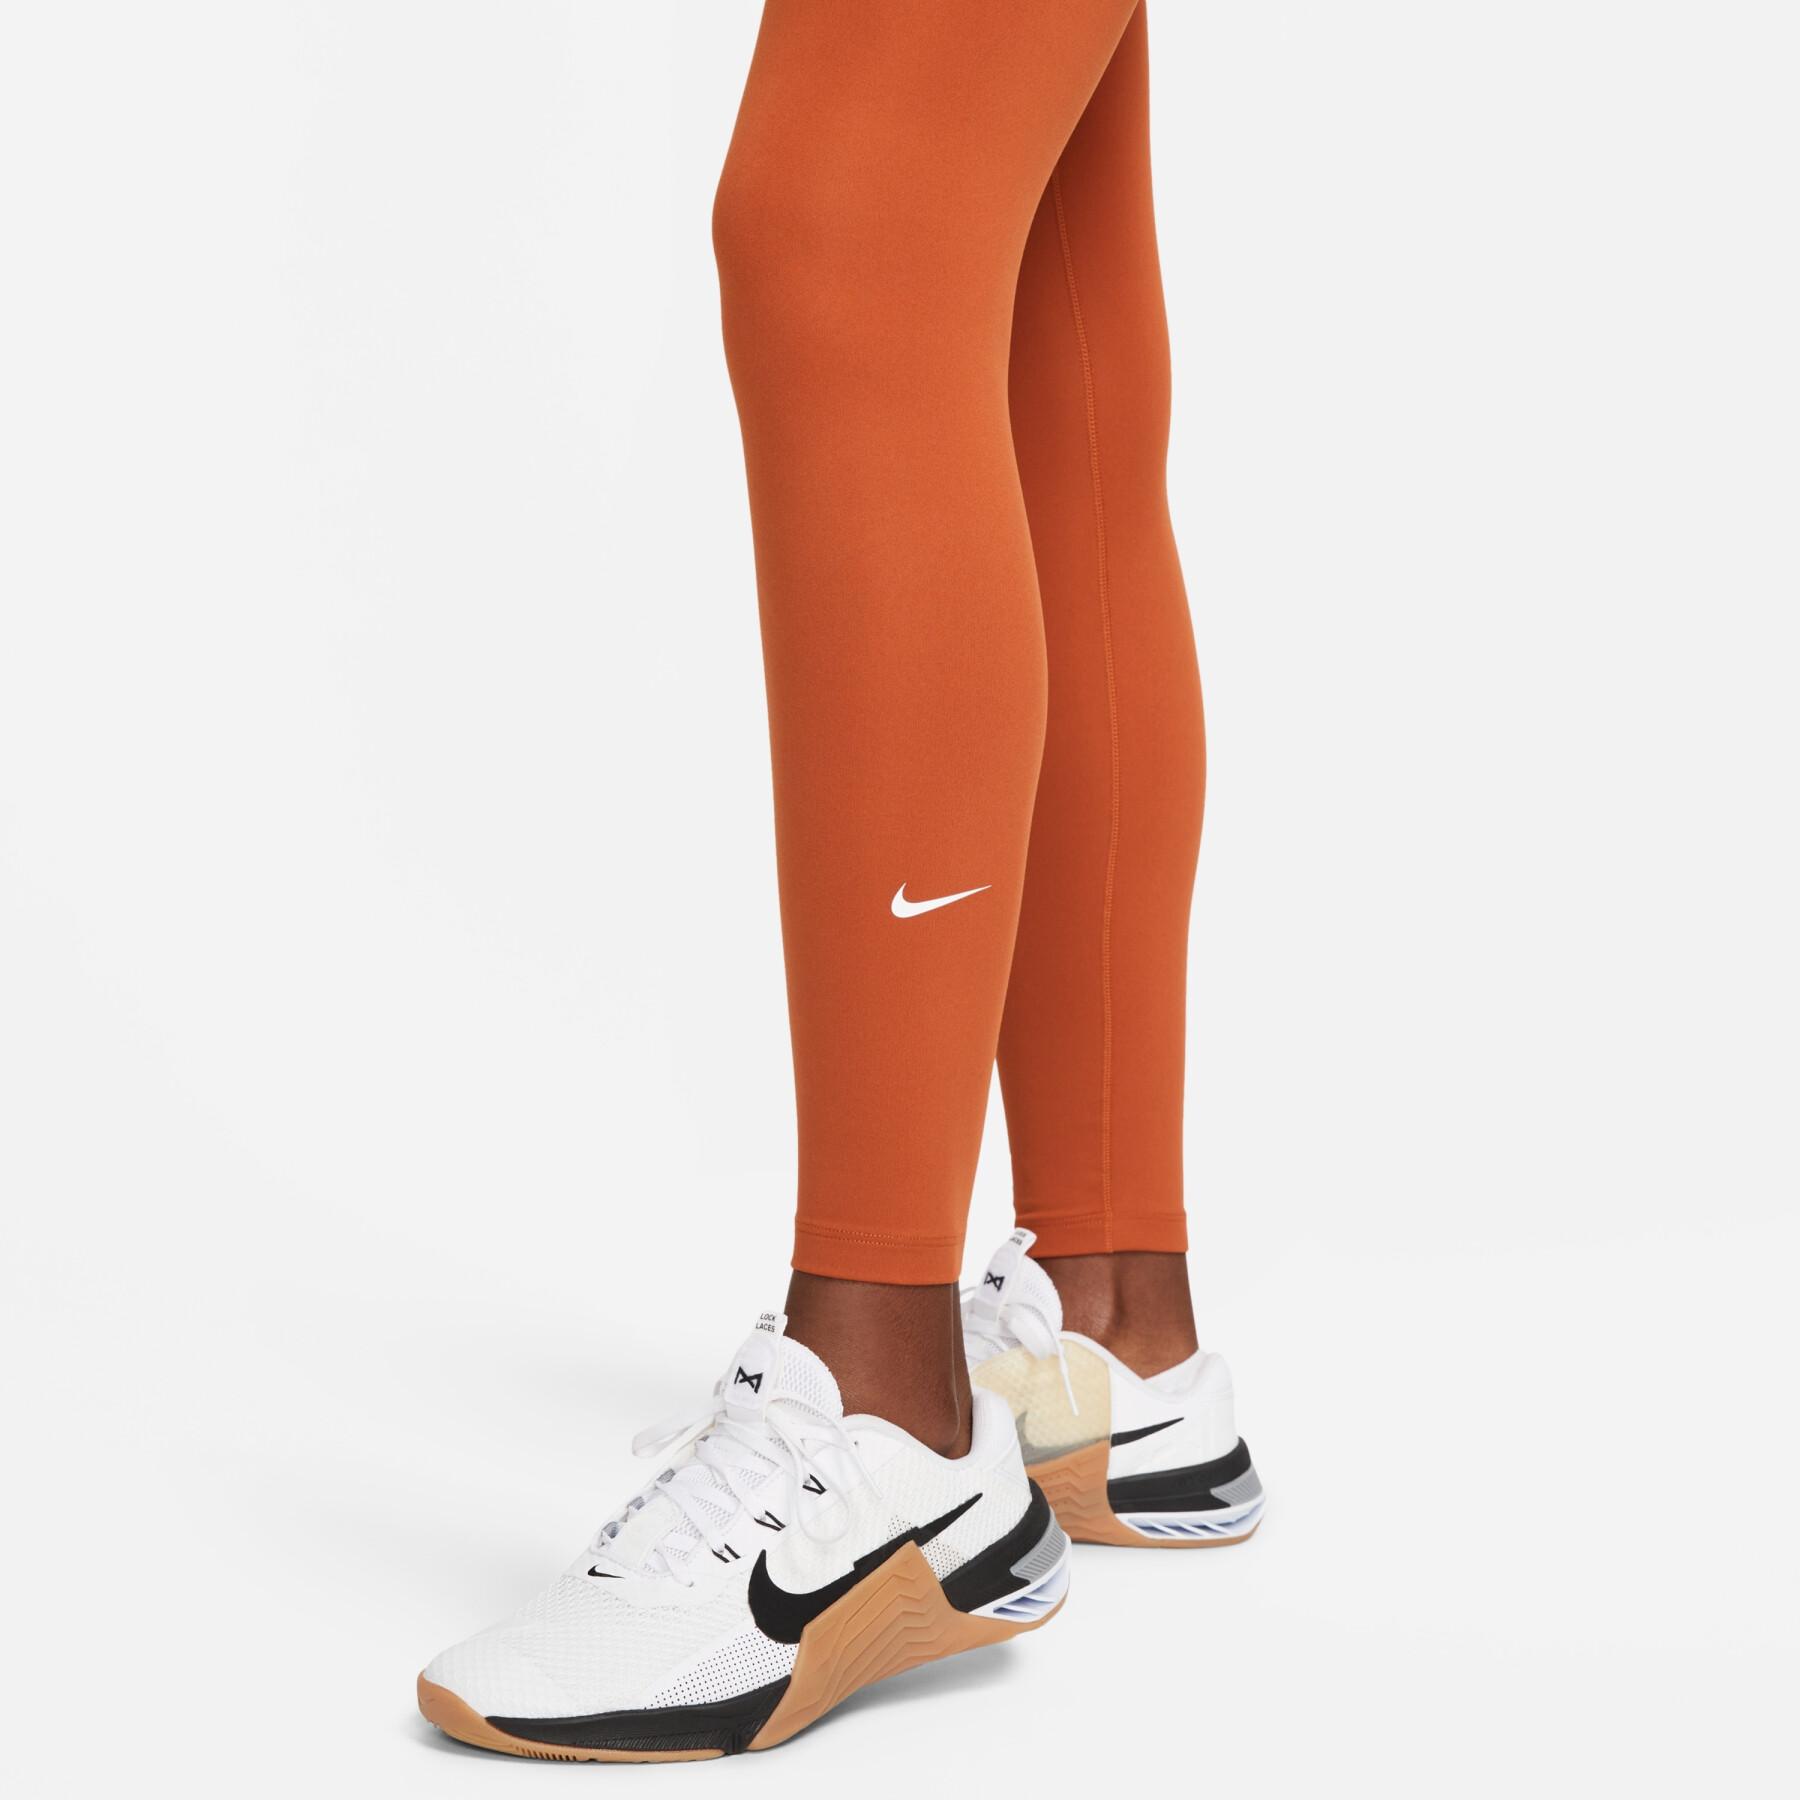 Legging high waist woman Nike One Dri-FIT